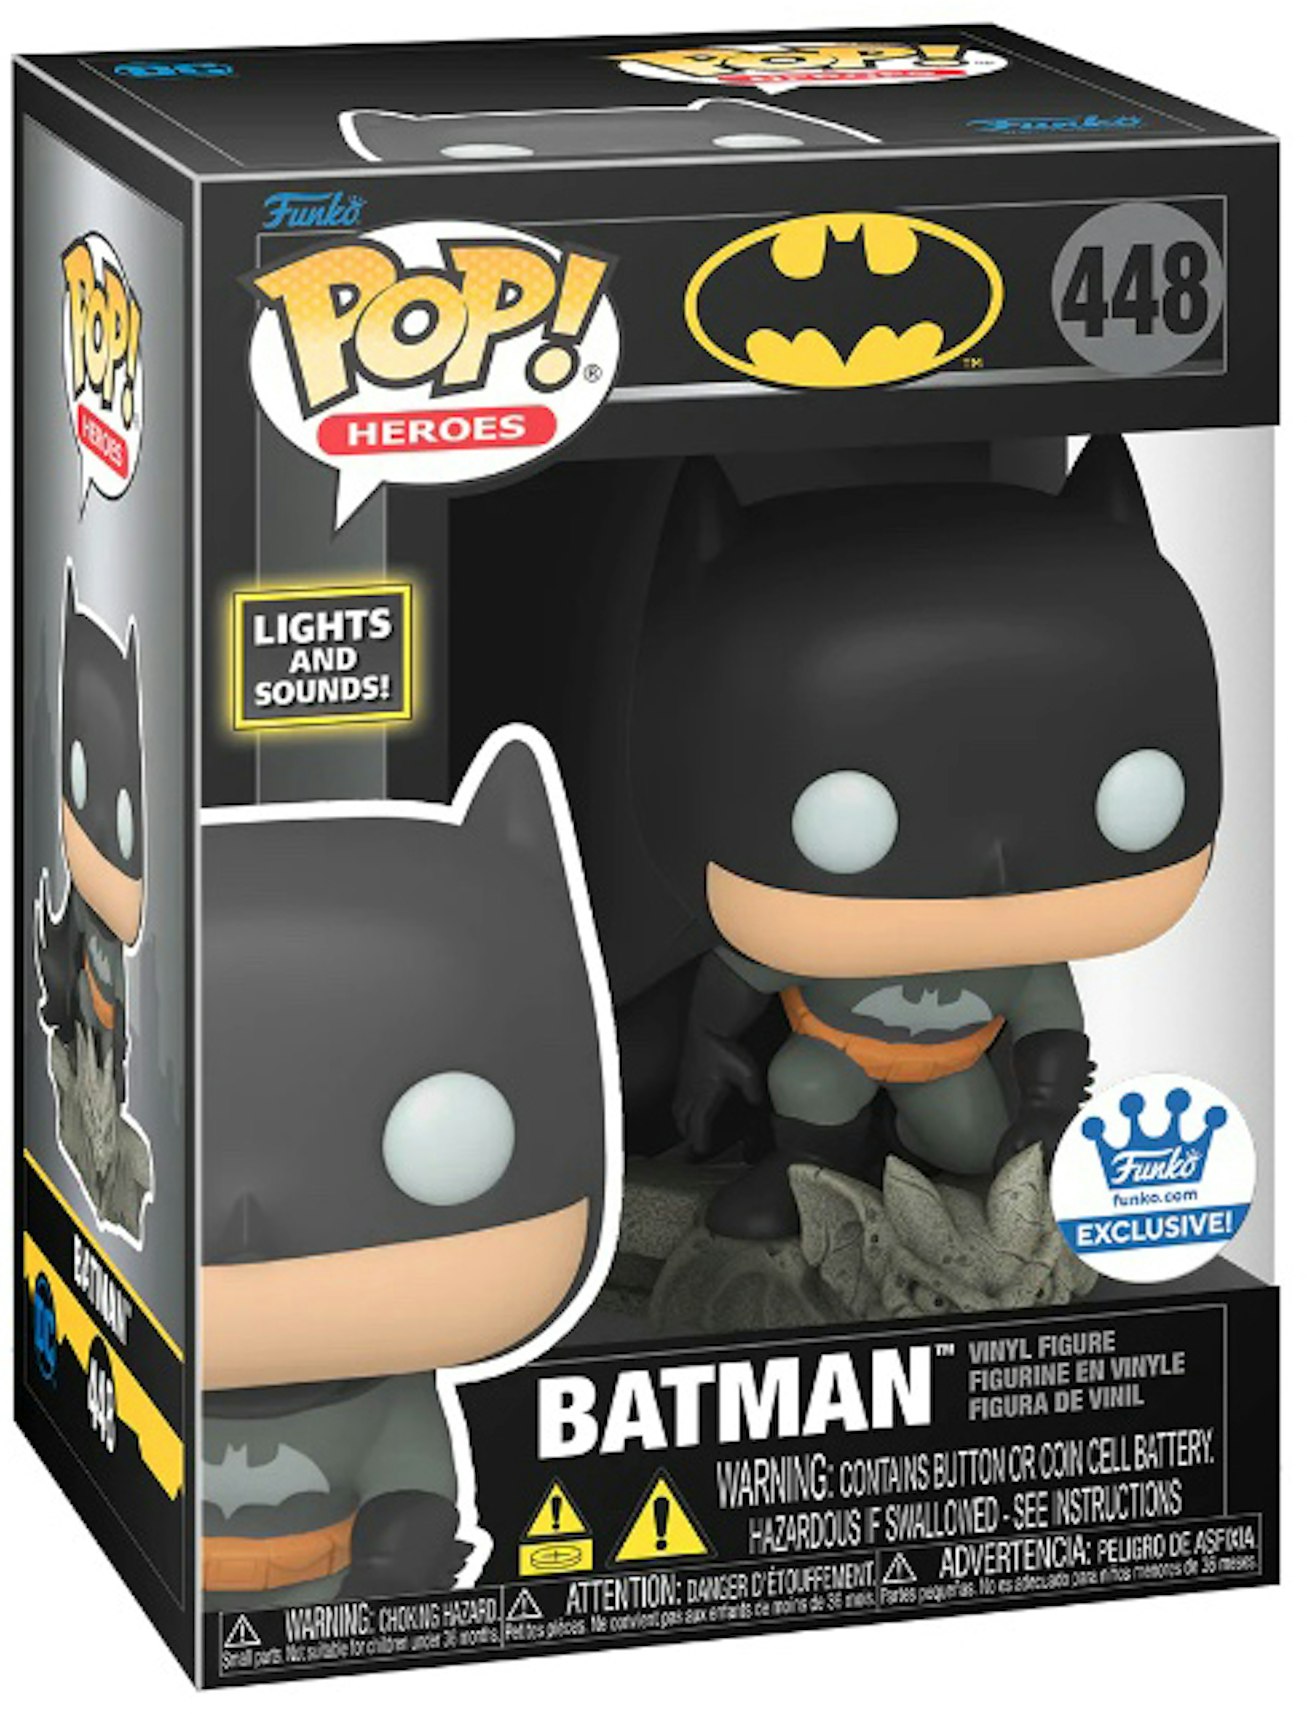 Estereotipo Típicamente Alboroto Funko Pop! Heroes Batman (With Lights and Sounds) Funko Shop Exclusive  Figure #448 - US